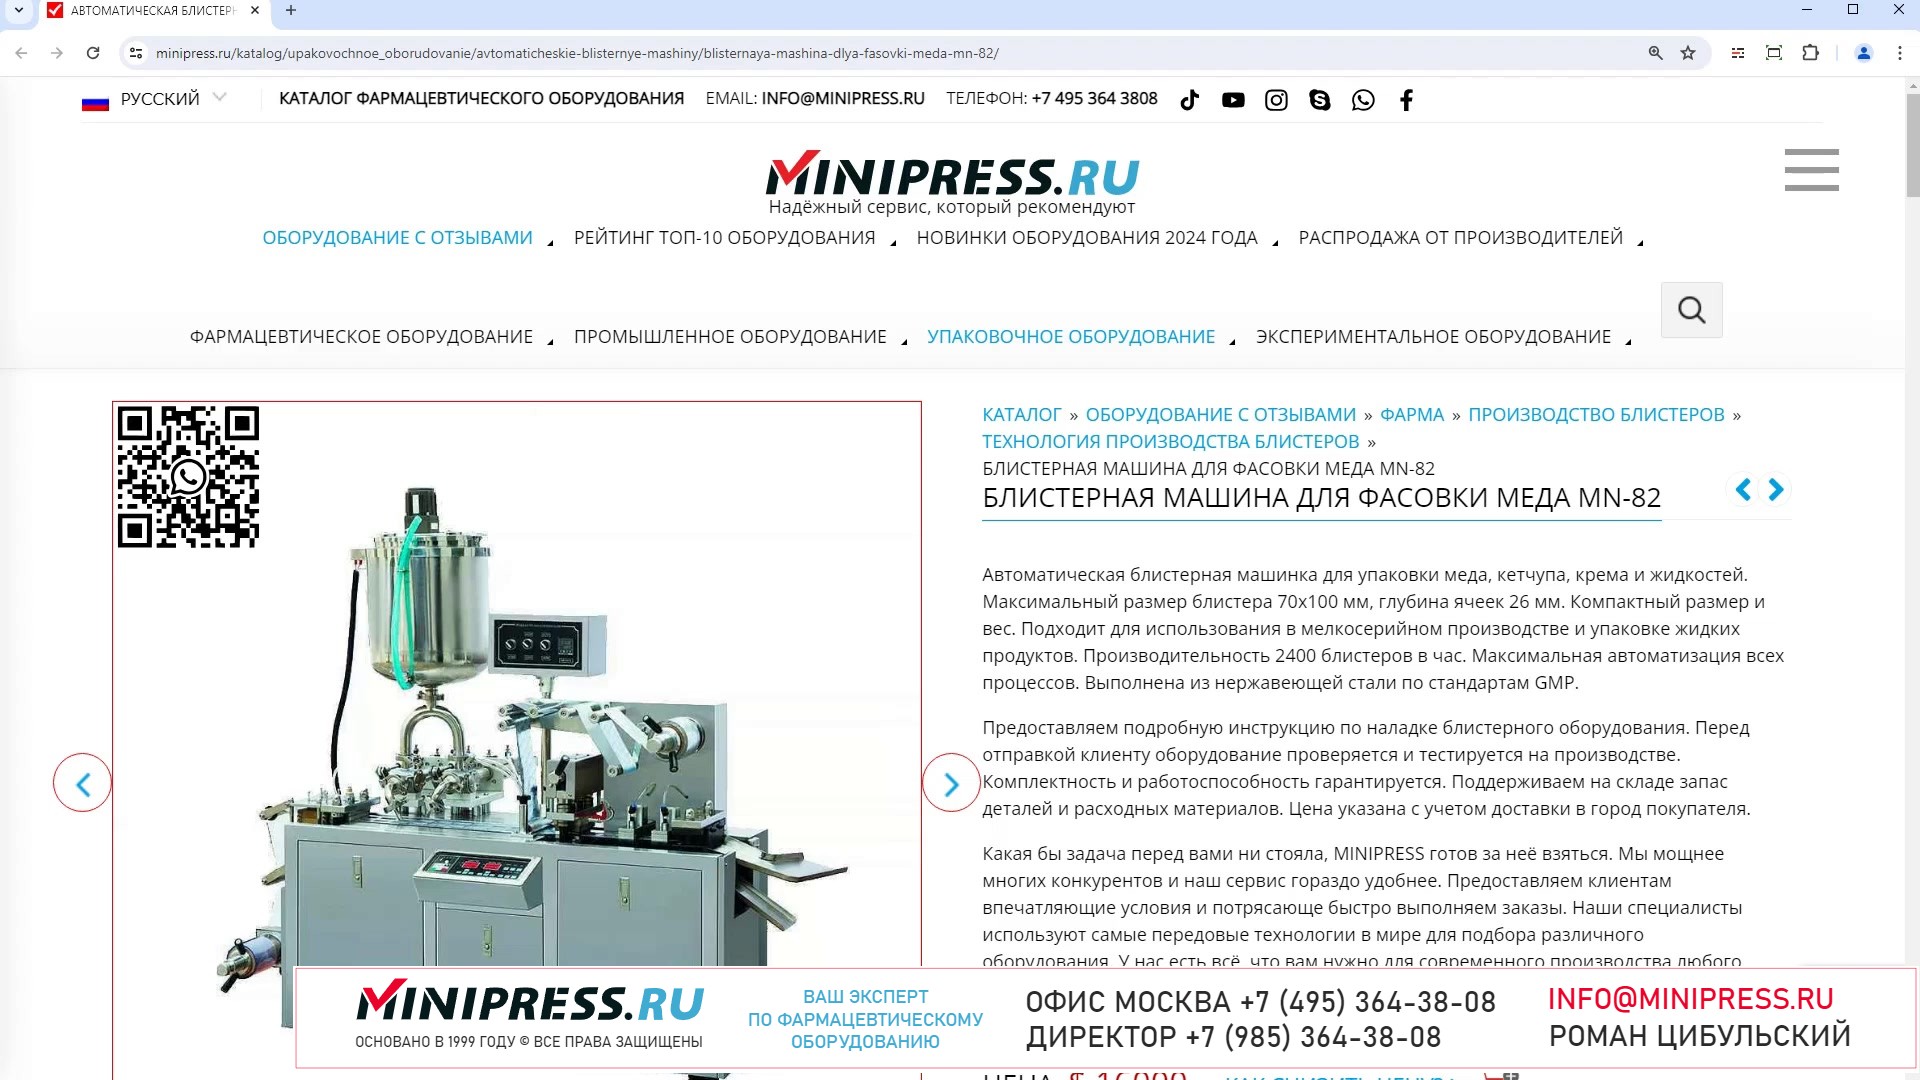 Minipress.ru Блистерная машина для фасовки меда MN-82